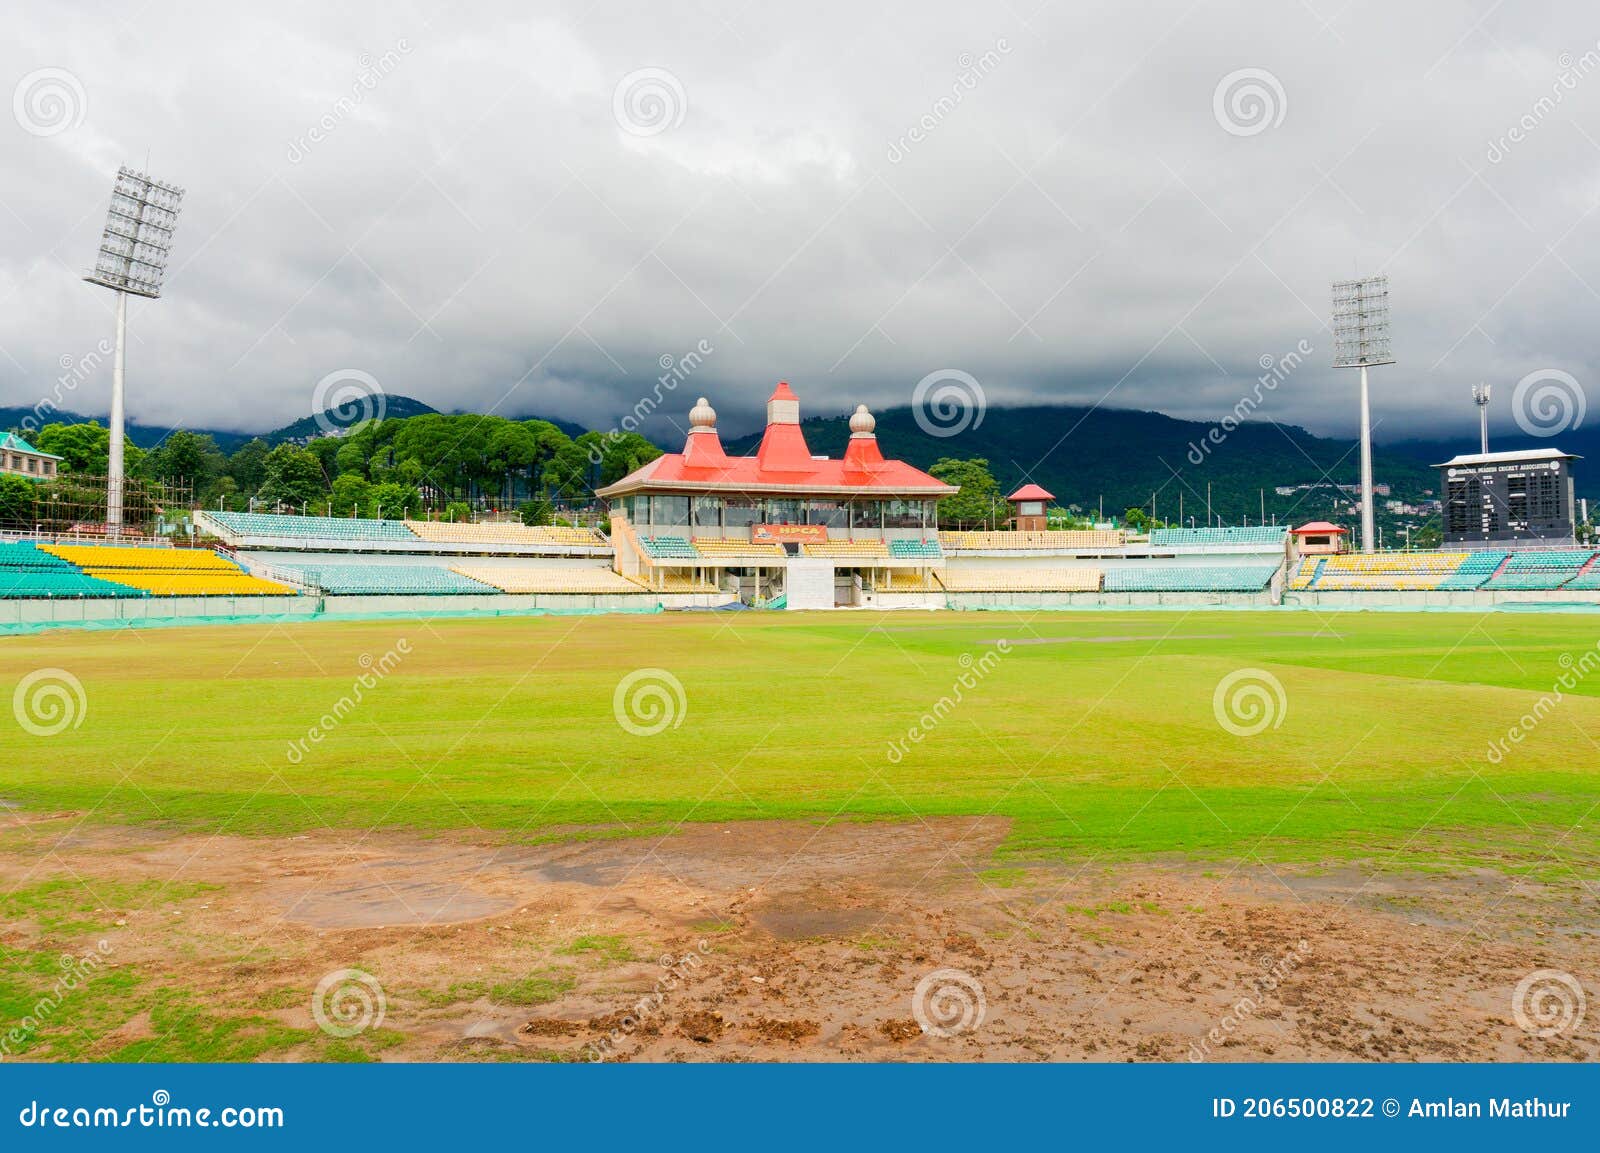 Cricket Stadium Dharamshala Stock Photos - Free & Royalty-Free Stock Photos  from Dreamstime